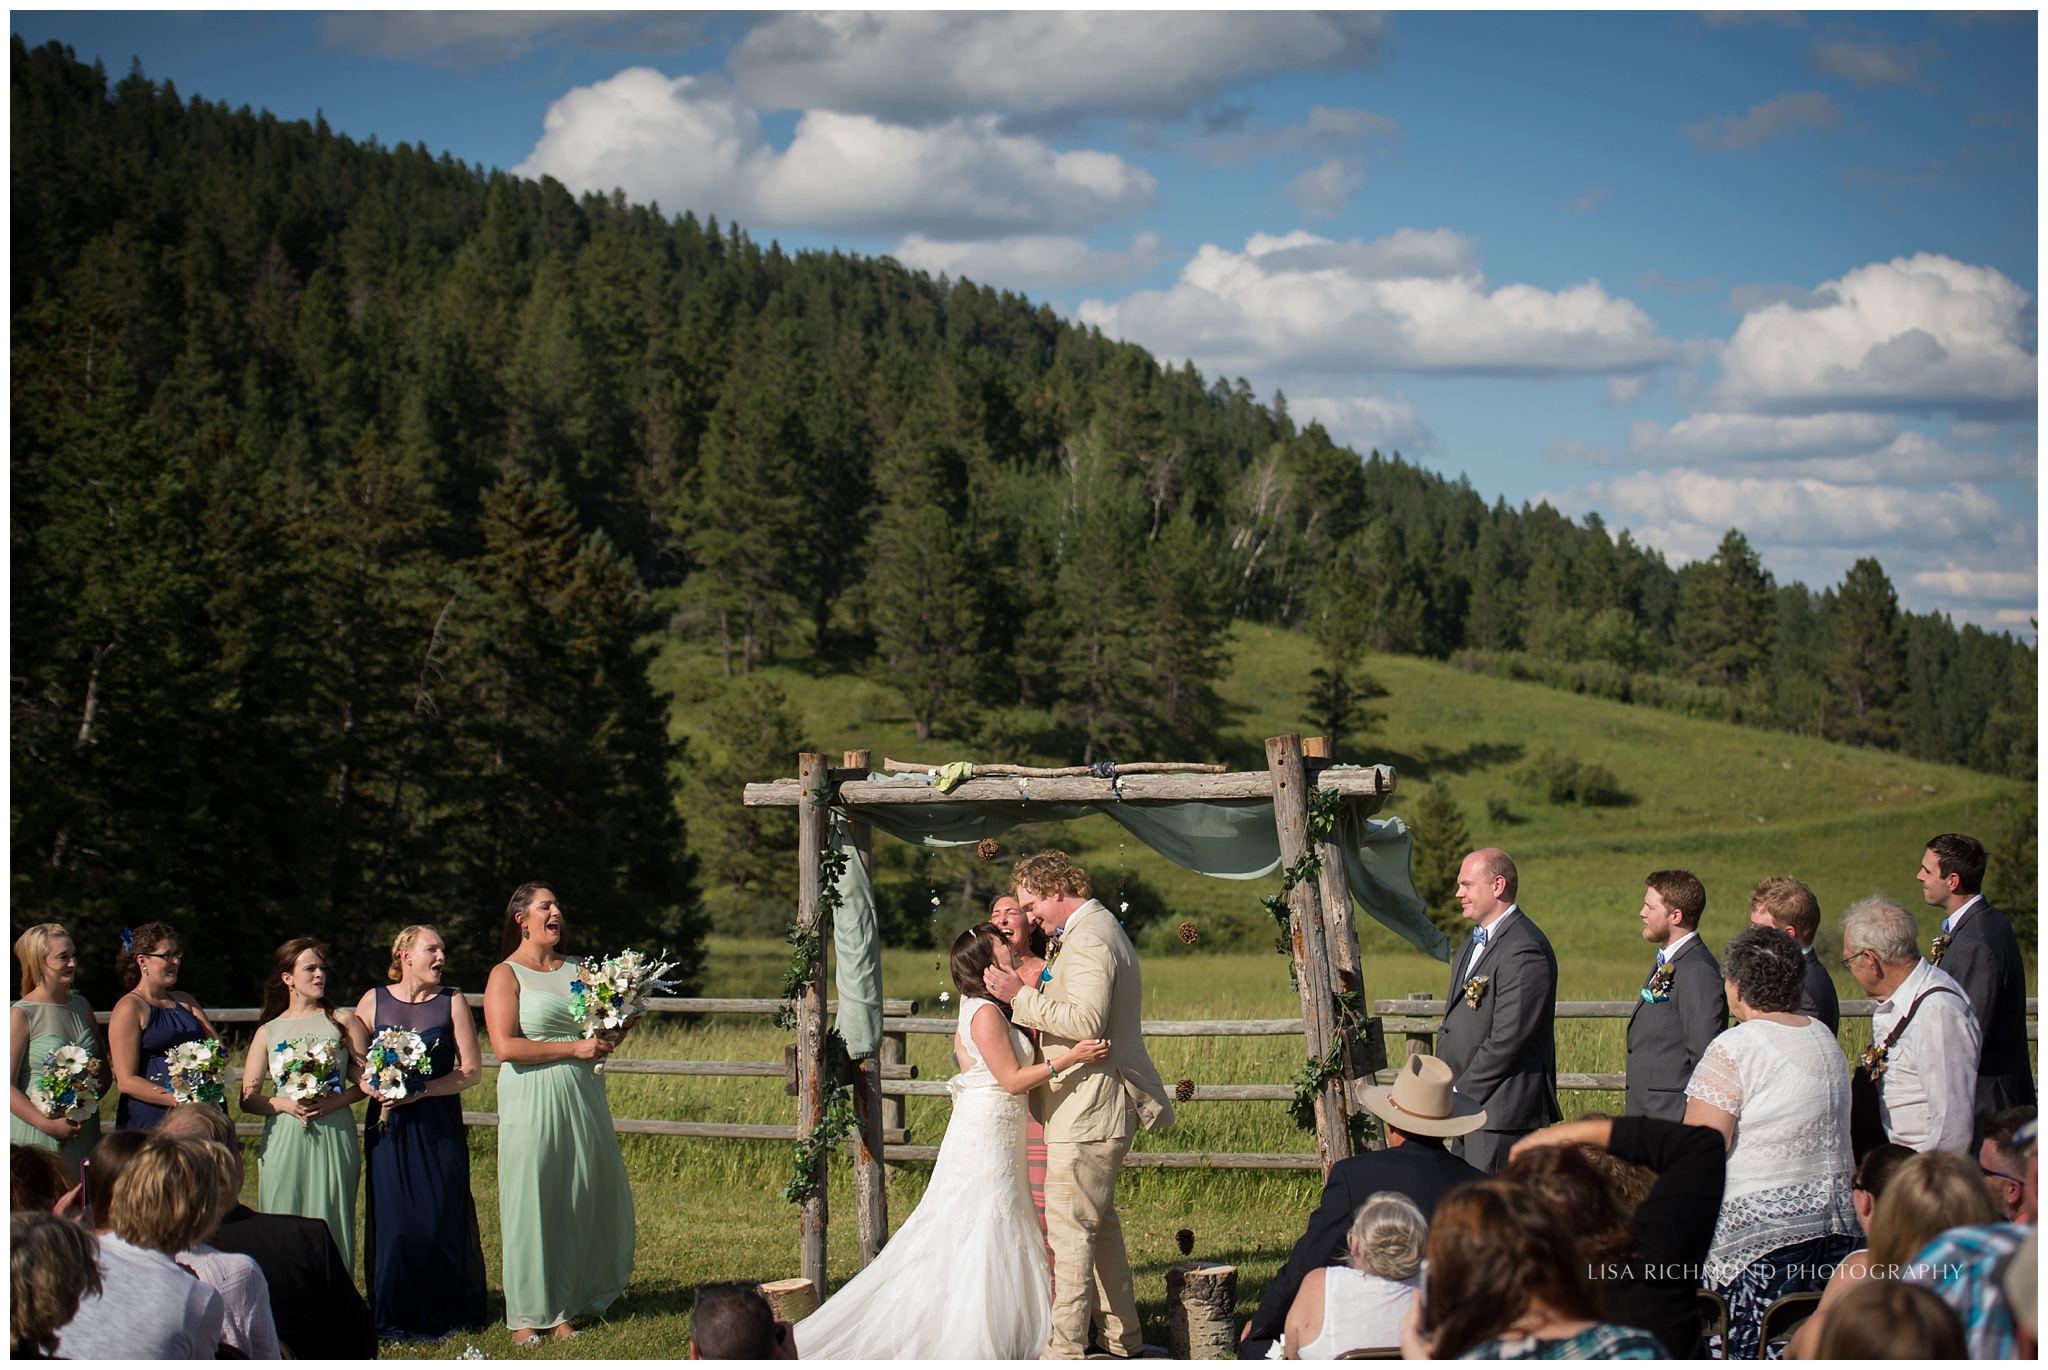 Lisa Richmond Photography-Destination Wedding Photographer_1742